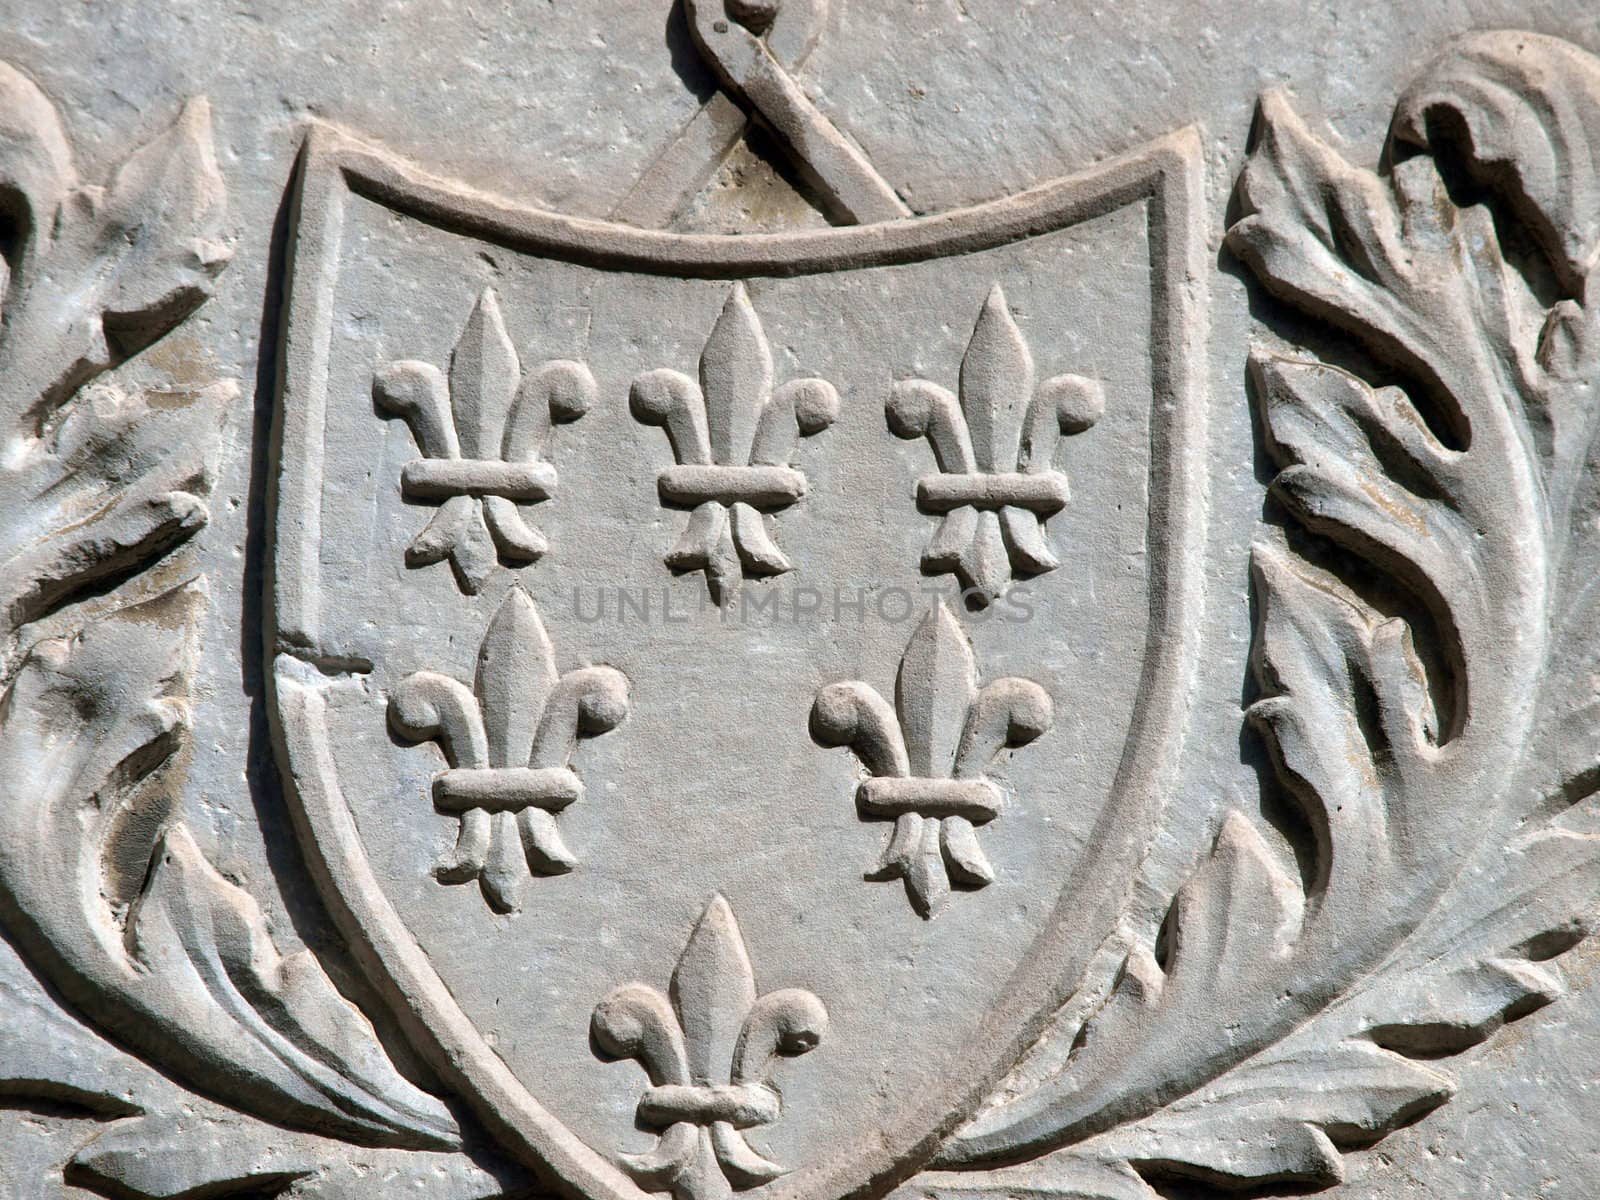 Tuscany - one of many signs of heraldic by wjarek